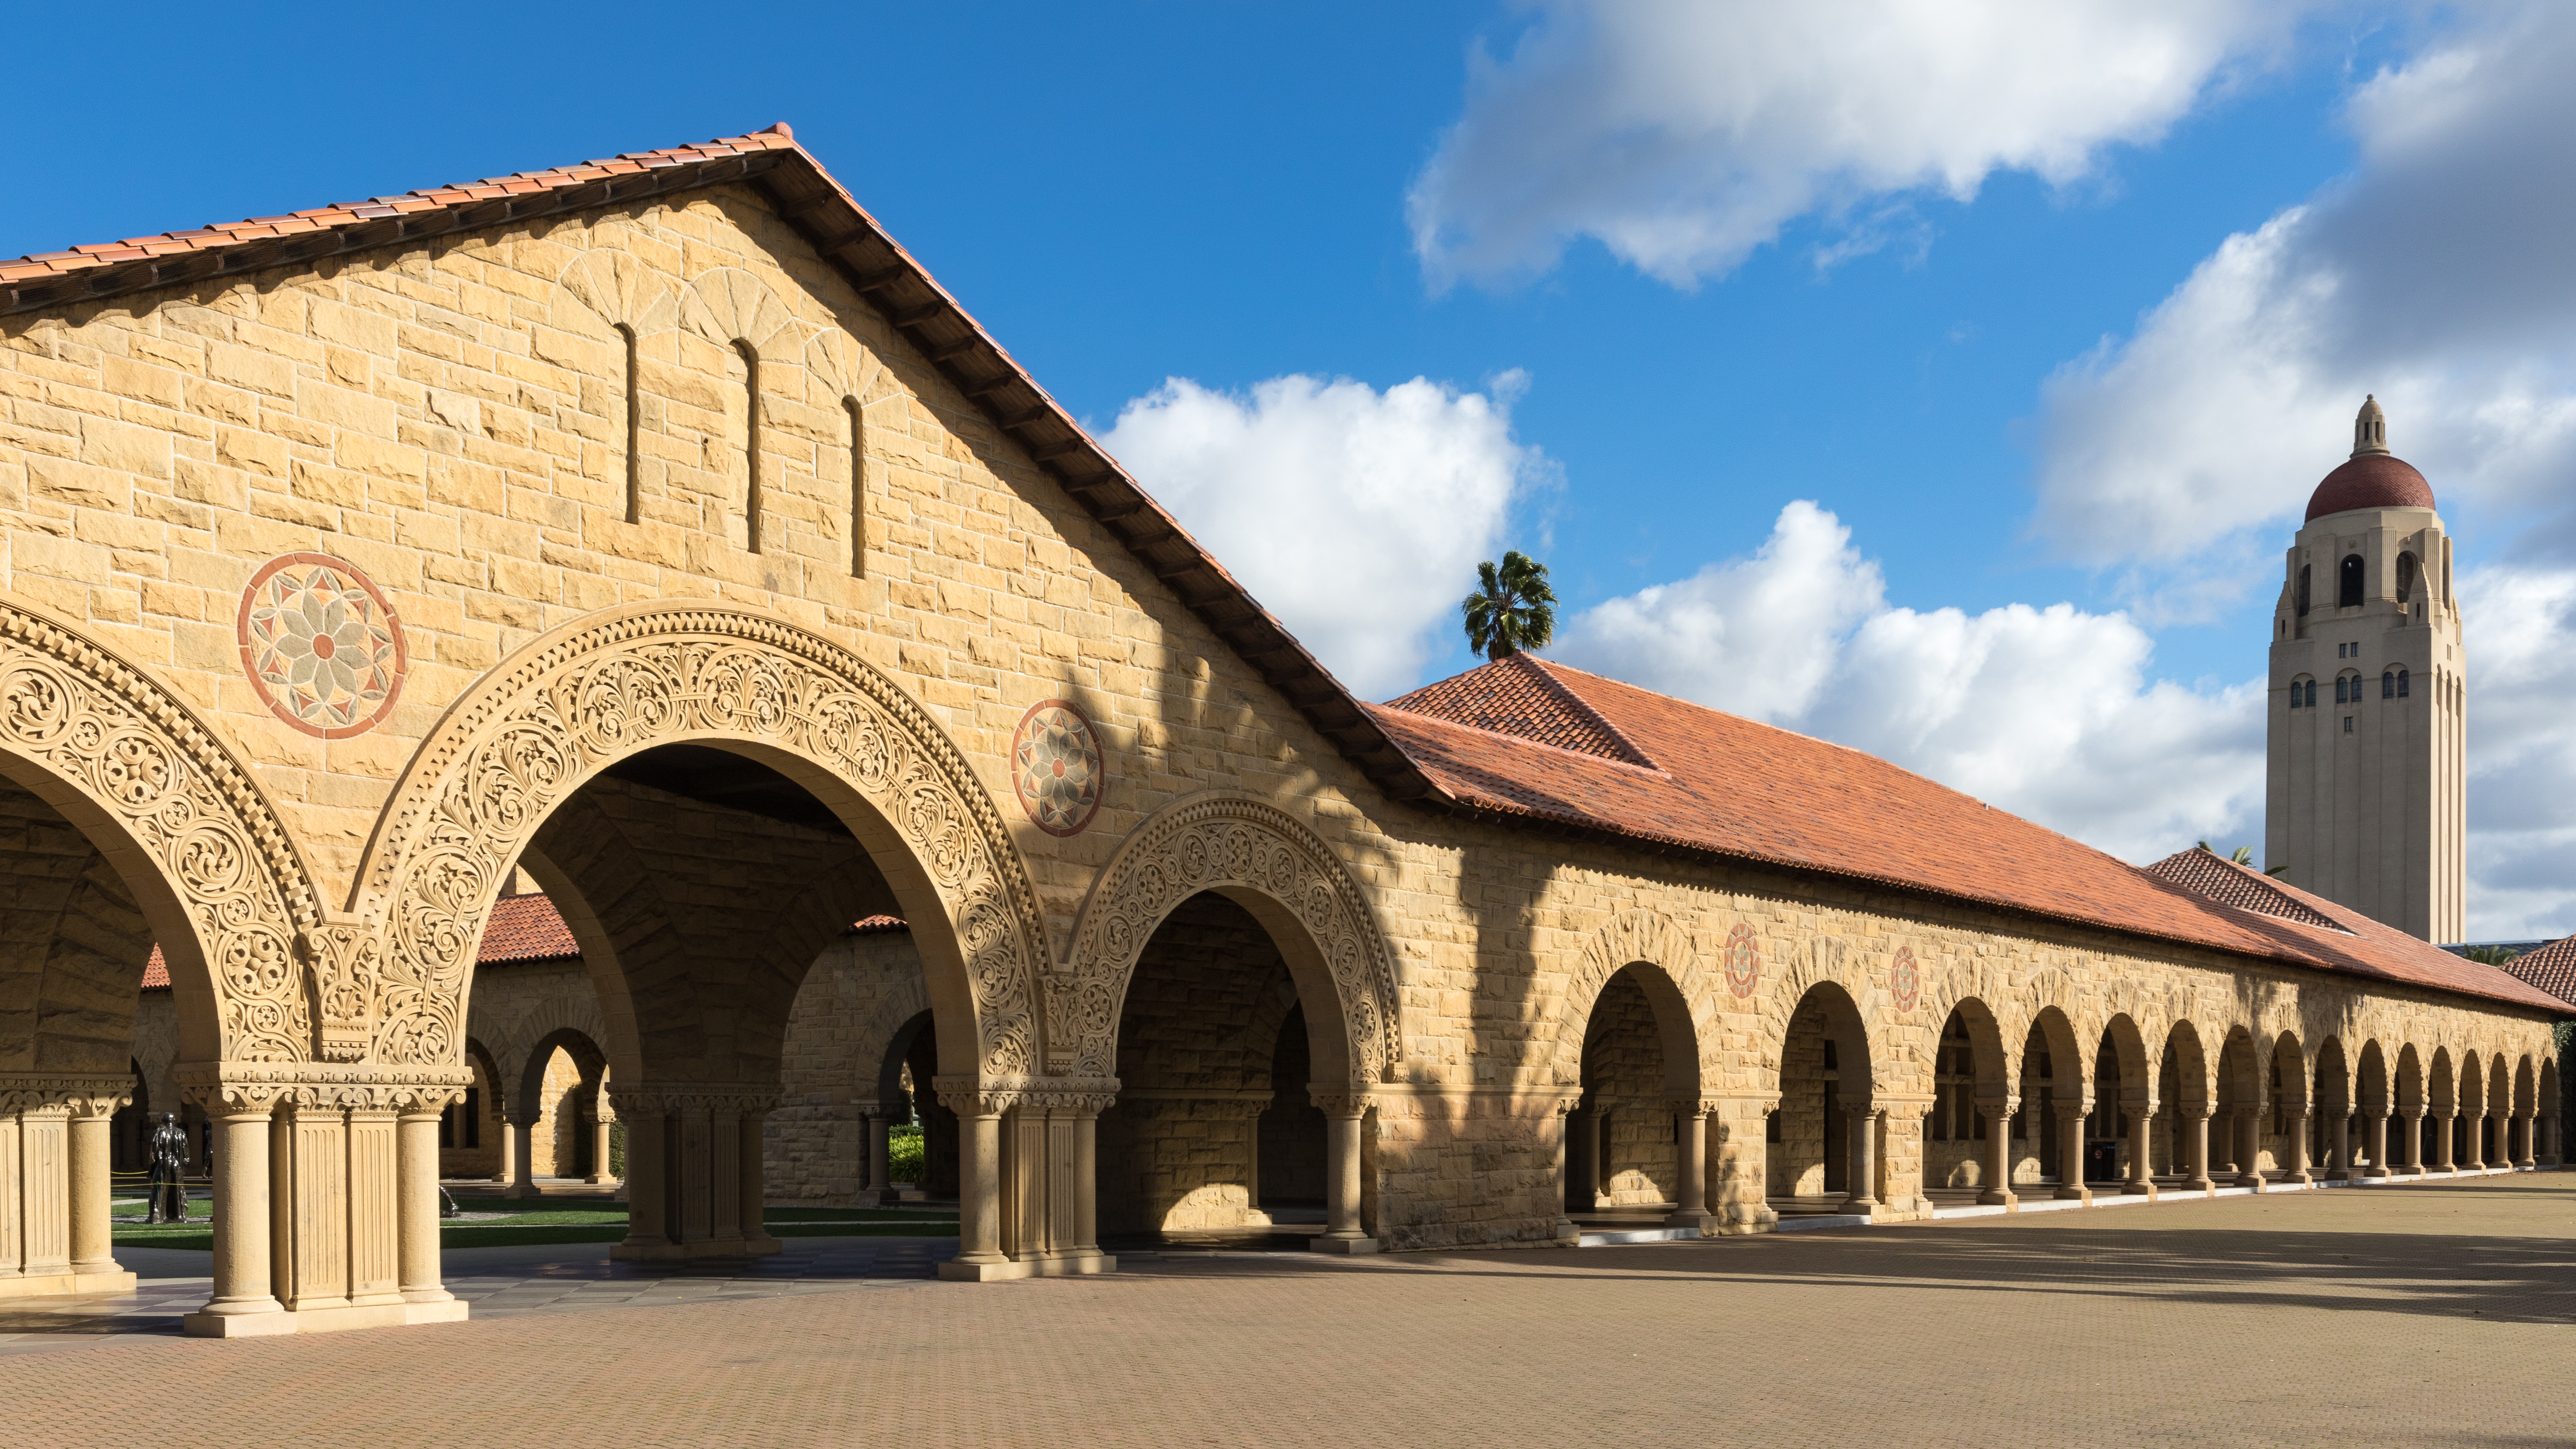 File:Stanford University campus in 2016.jpg - Wikipedia